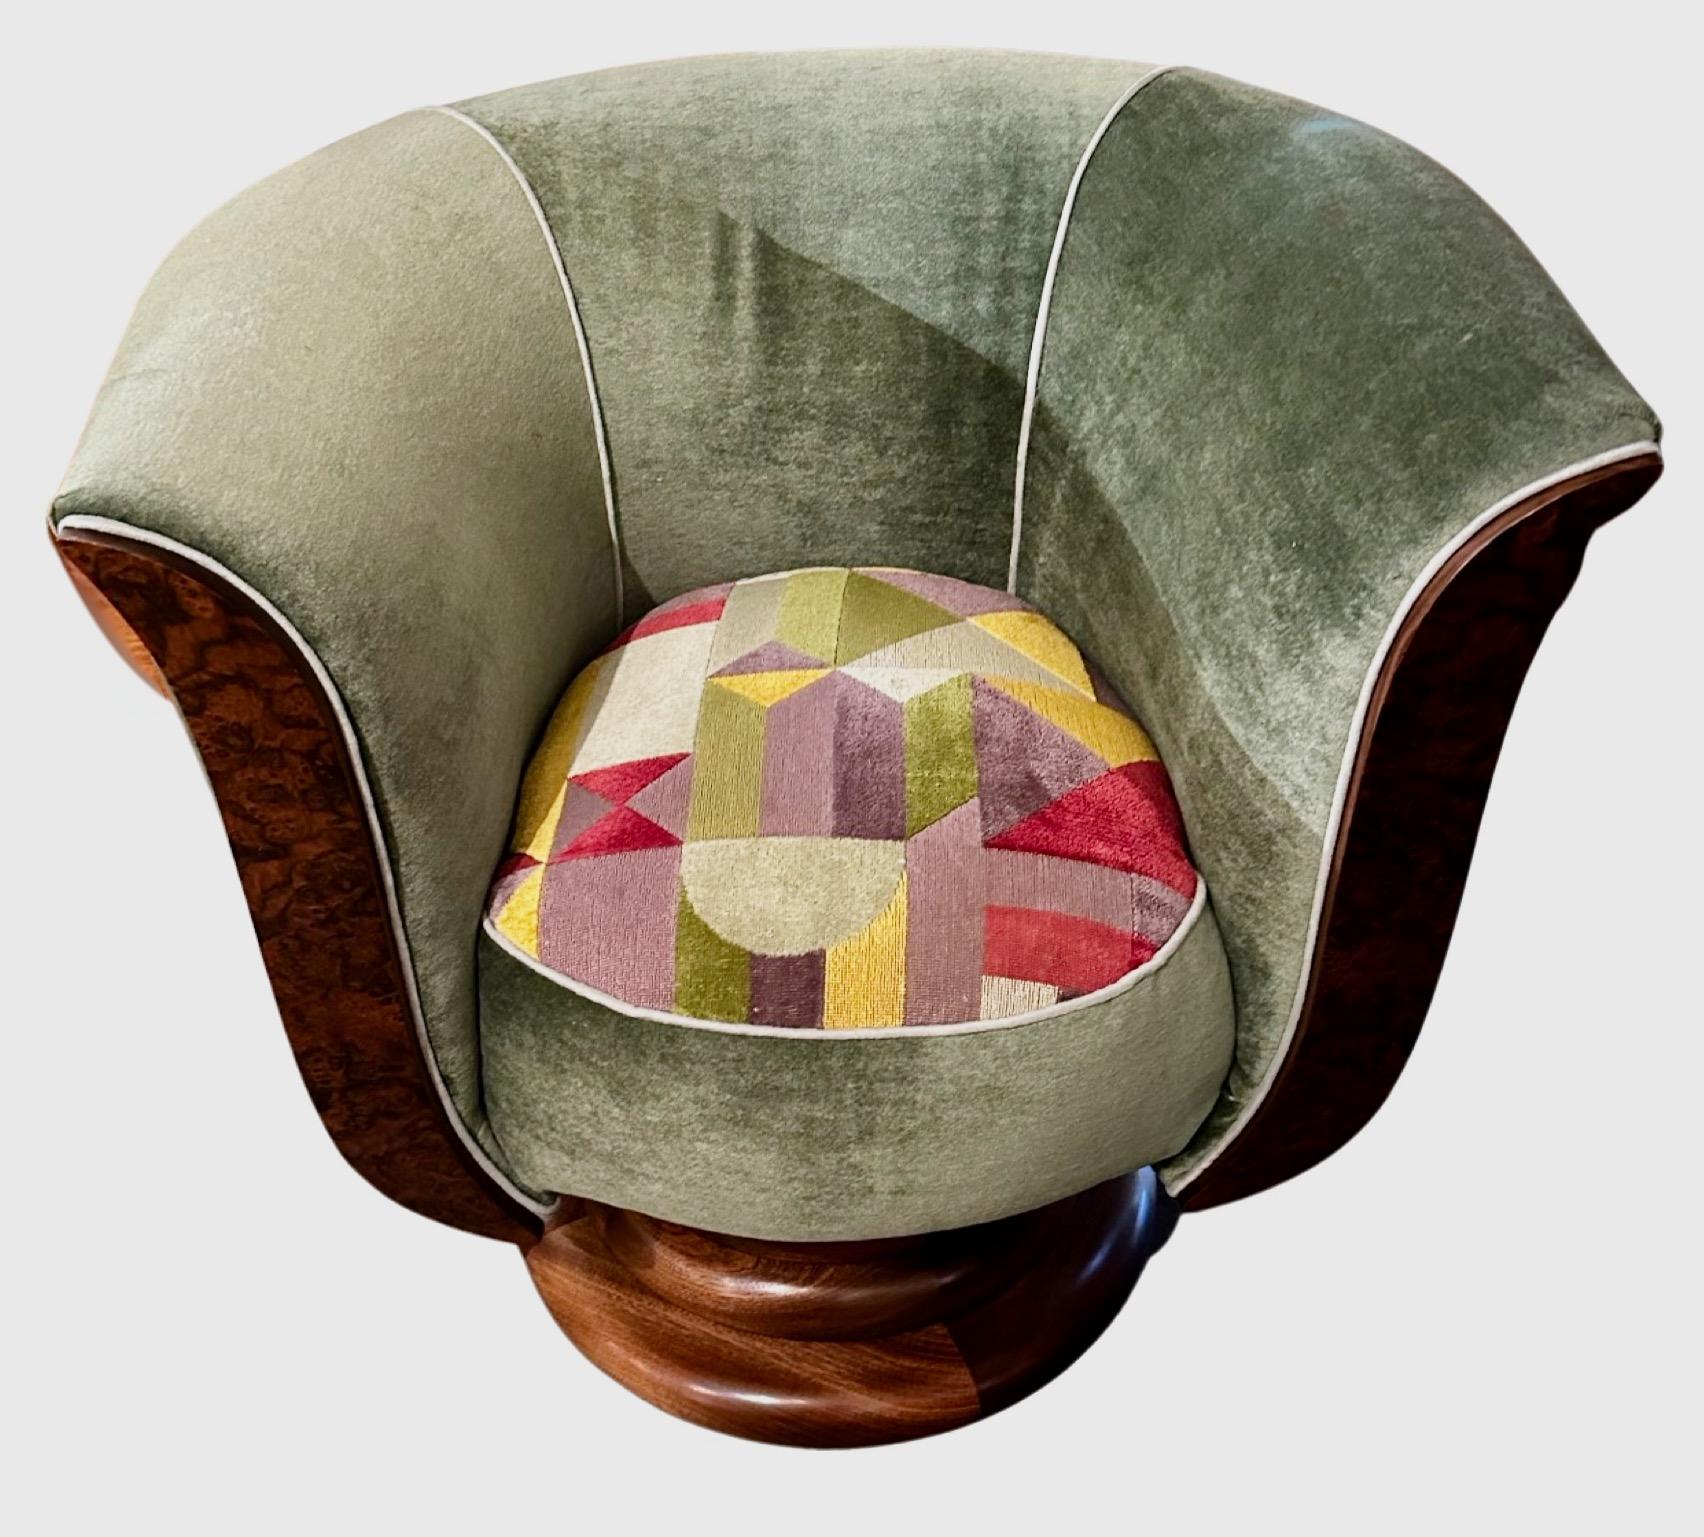 American Custom French Style Art Deco Swivel Chairs Mohair